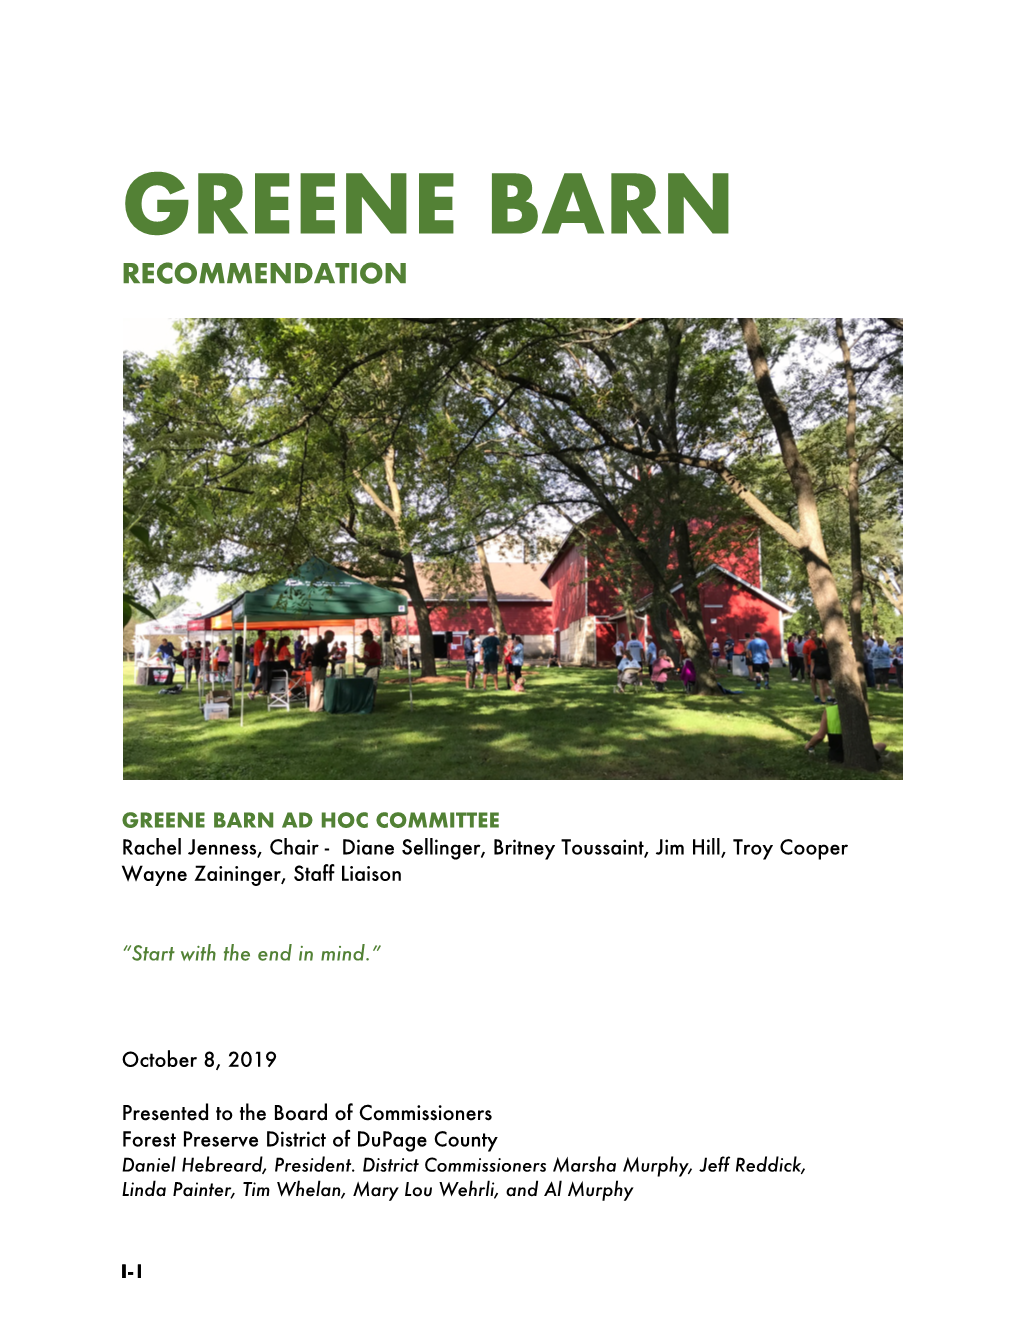 Greene Barn Recommendation